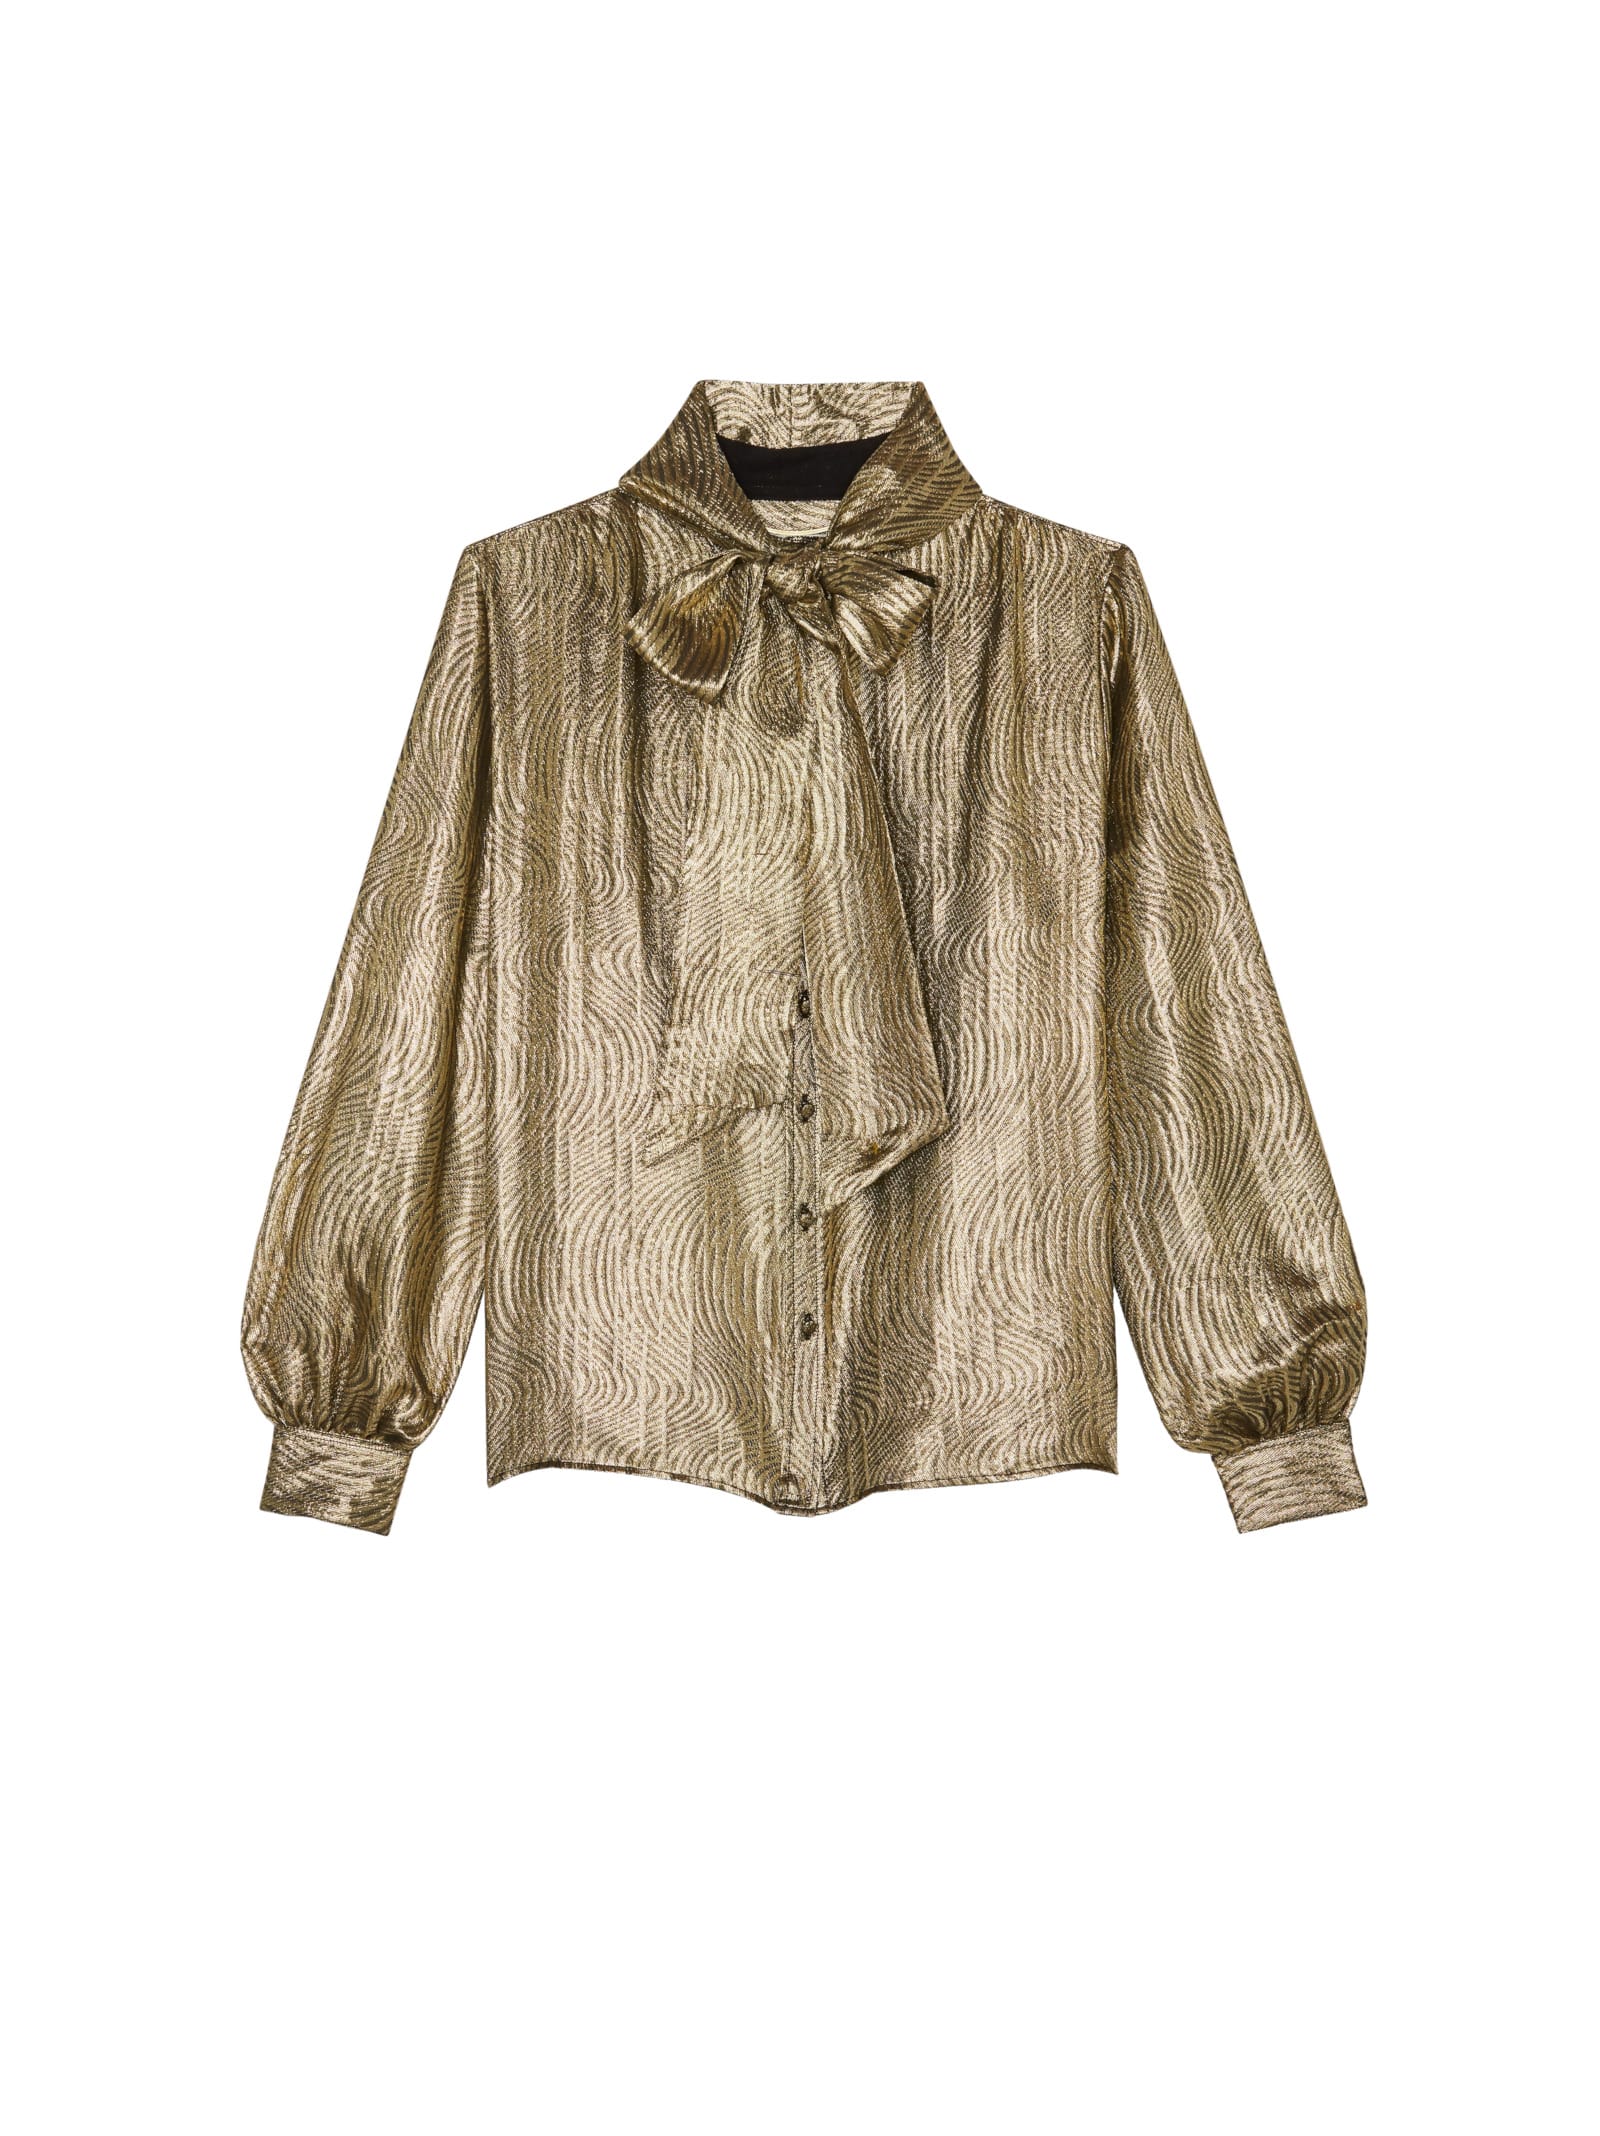 Saint Laurent Vague Doree Shirt In Khaki Gold